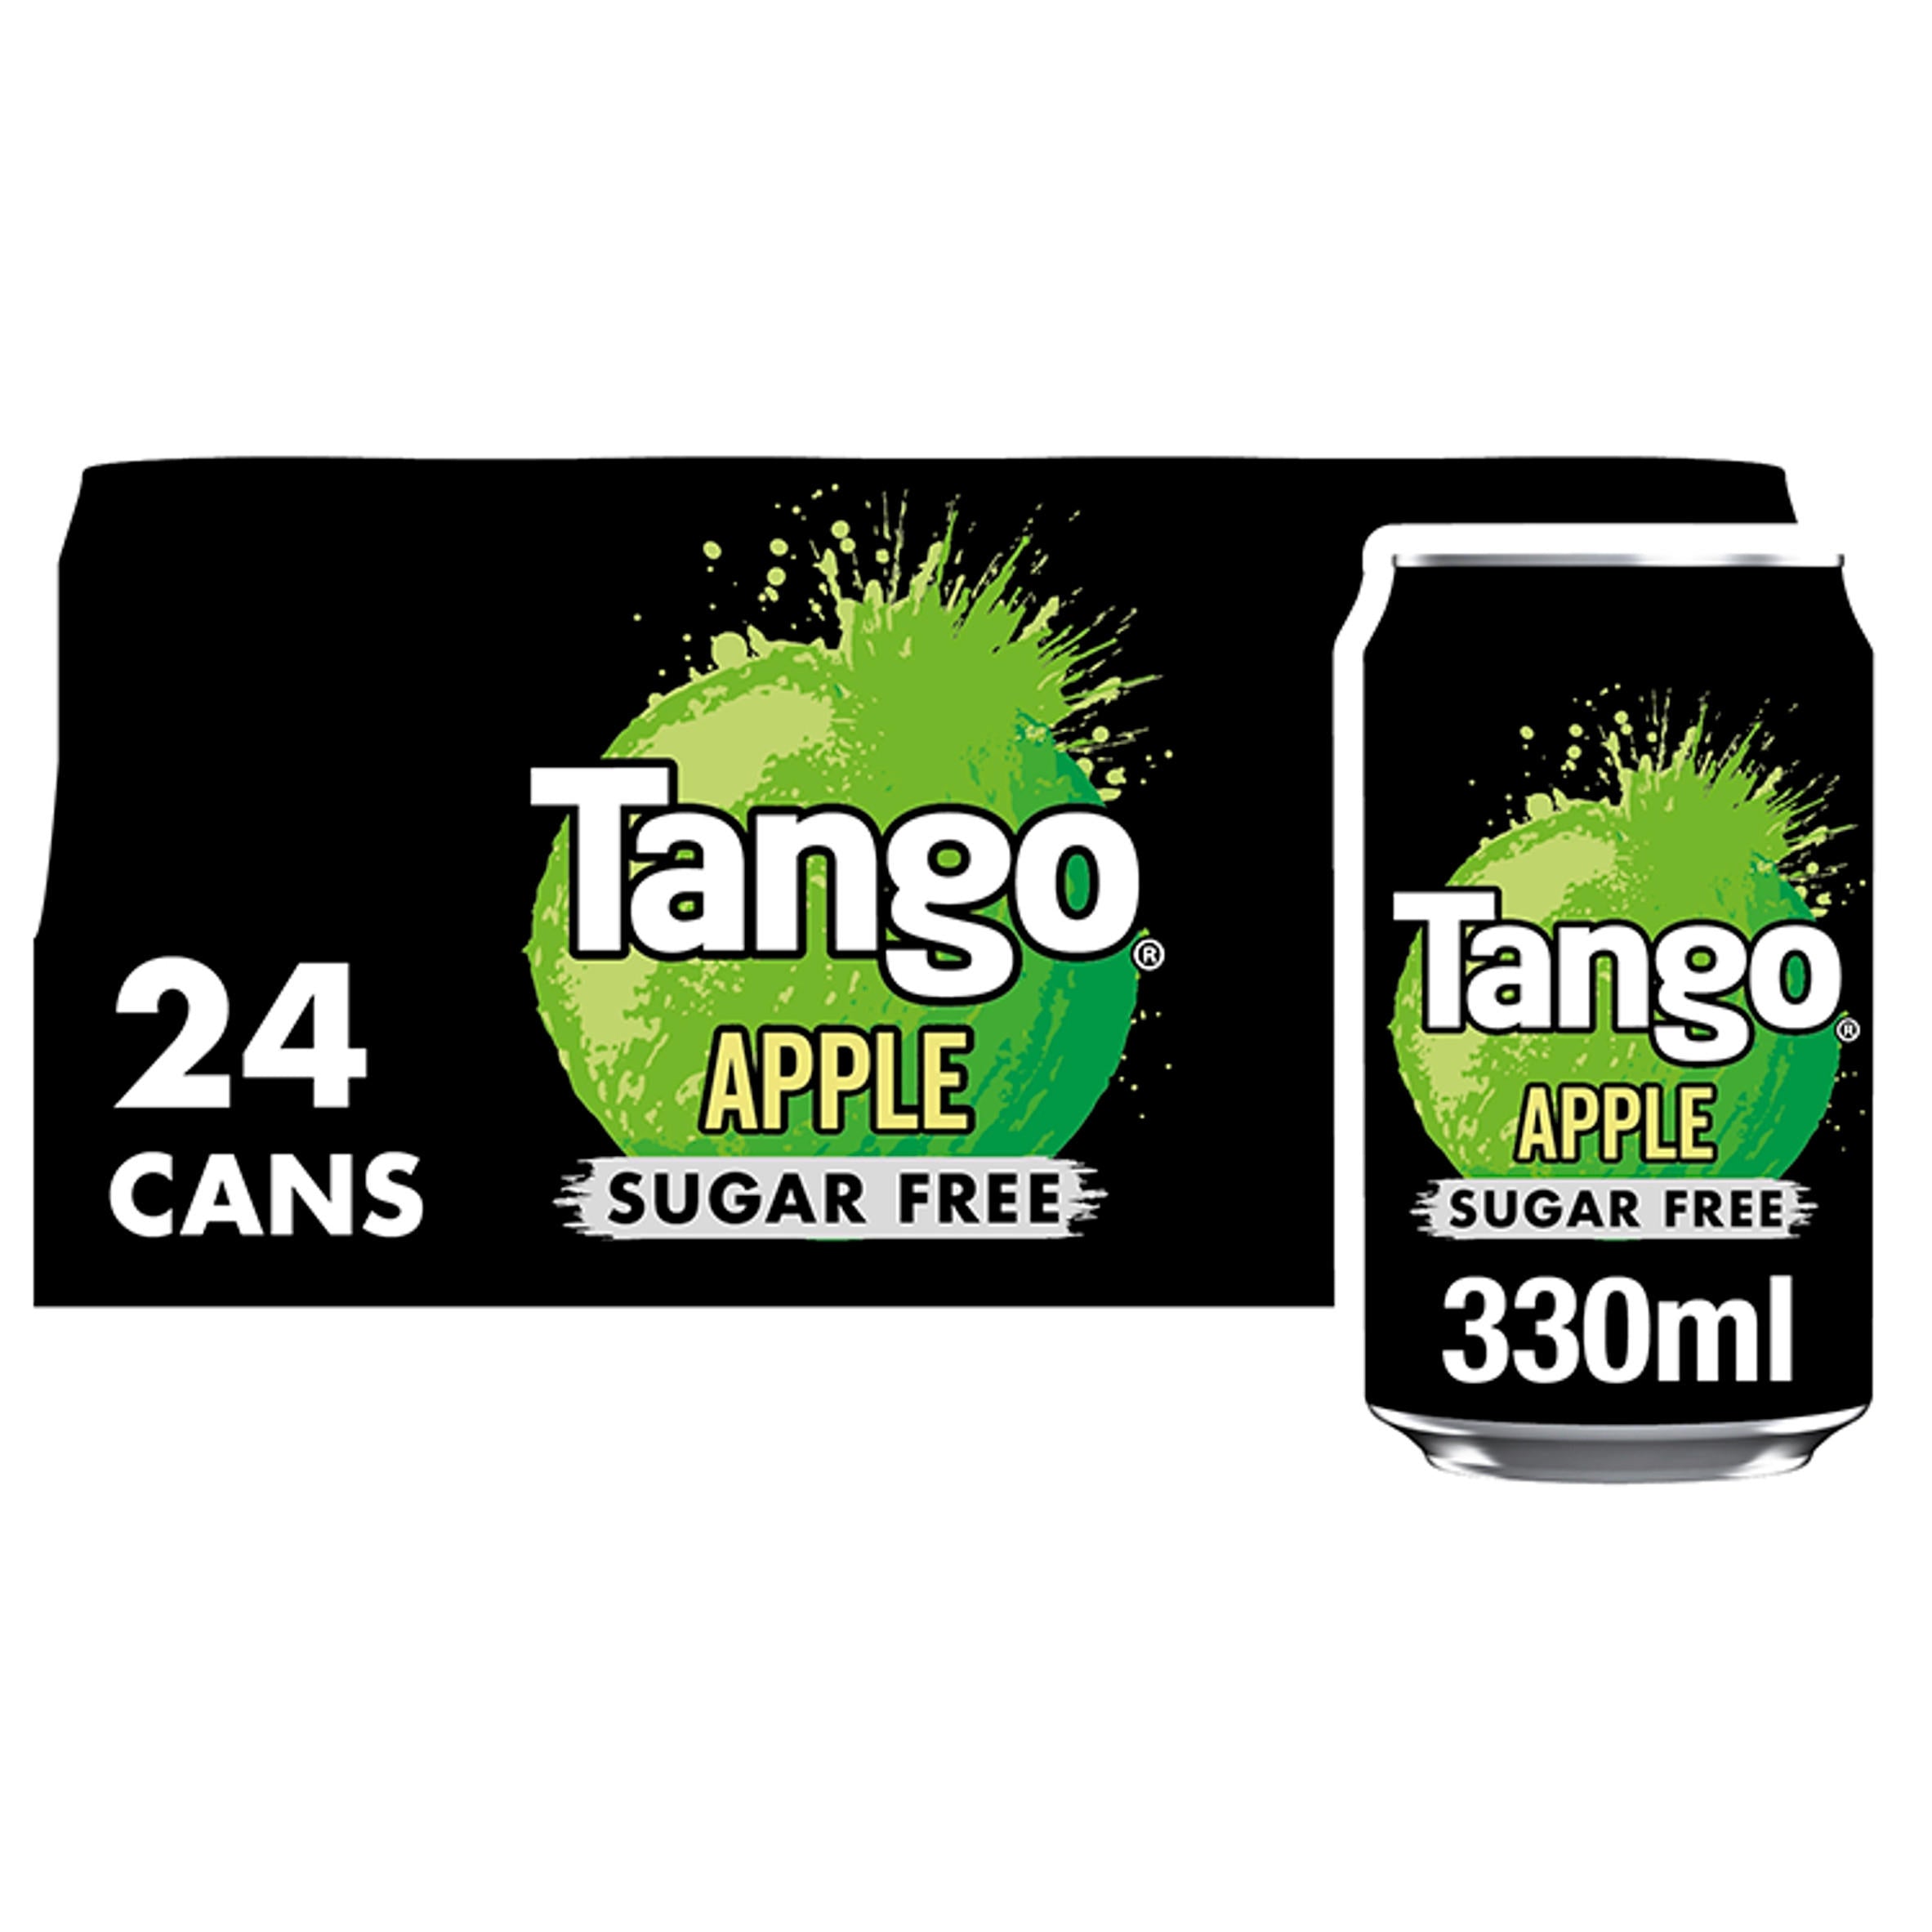 Tango Apple Sugar Free - 330ml Case of 24